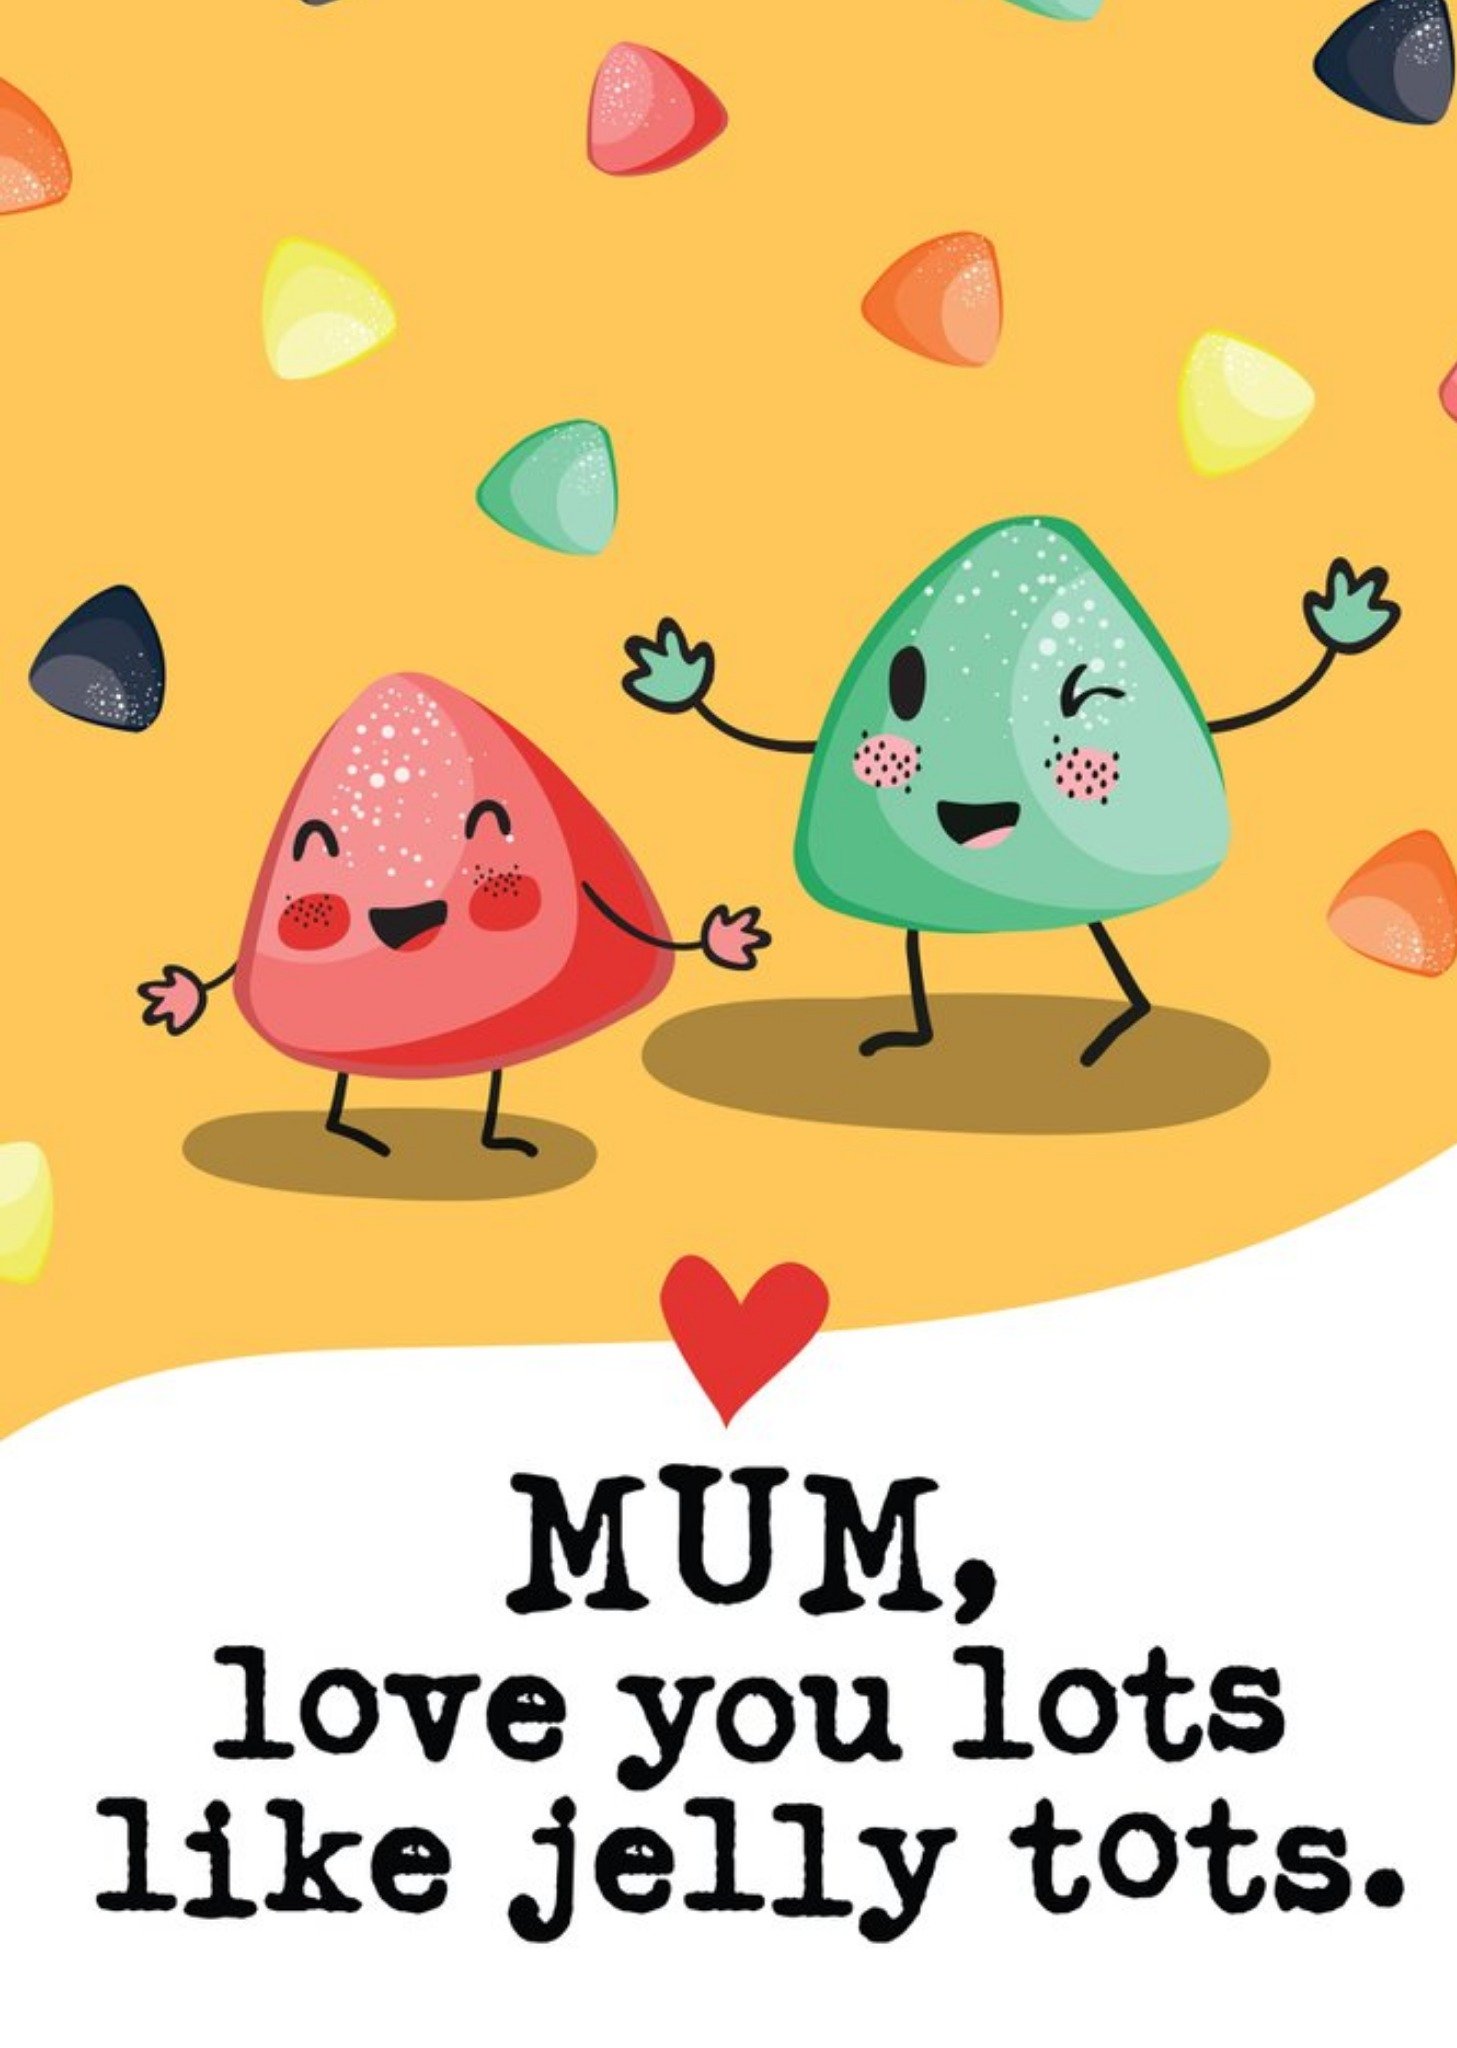 Love Hearts Mrs Best The London Studio Illustration Hand Written Mother's Day Card Ecard